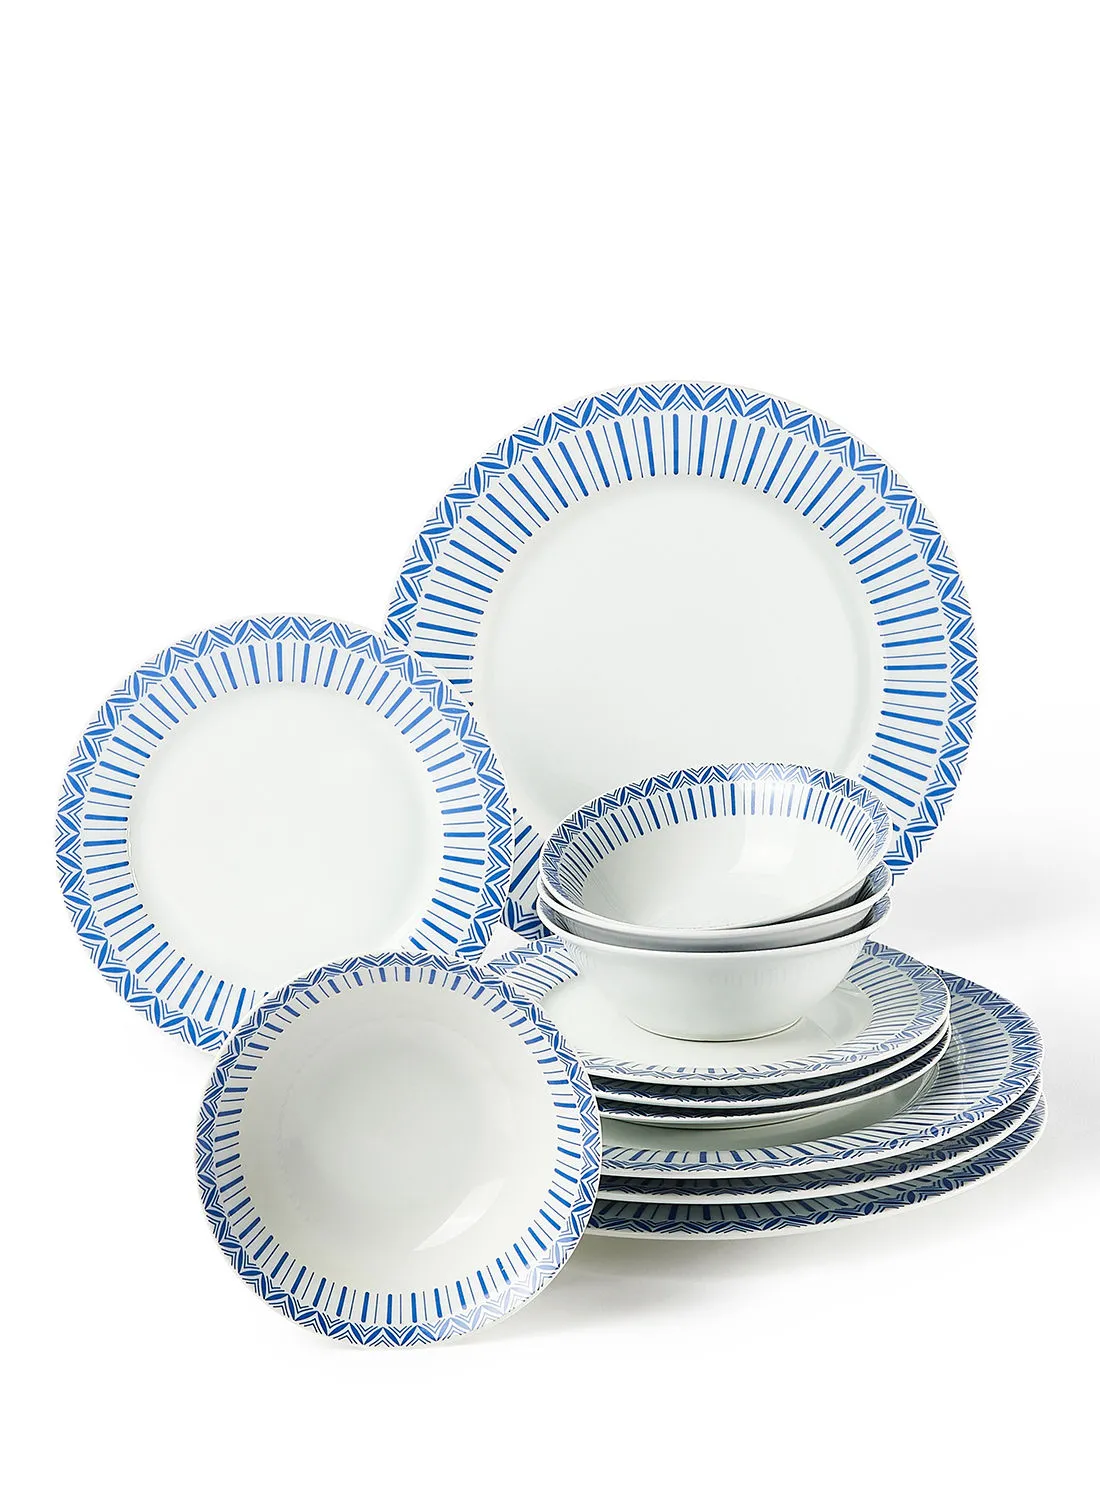 noon east 12 Piece Porcelain Dinner Set - Dishes, Plates - Dinner Plate, Side Plate, Soup Plate - Serves 4 - Printed Design Maurice